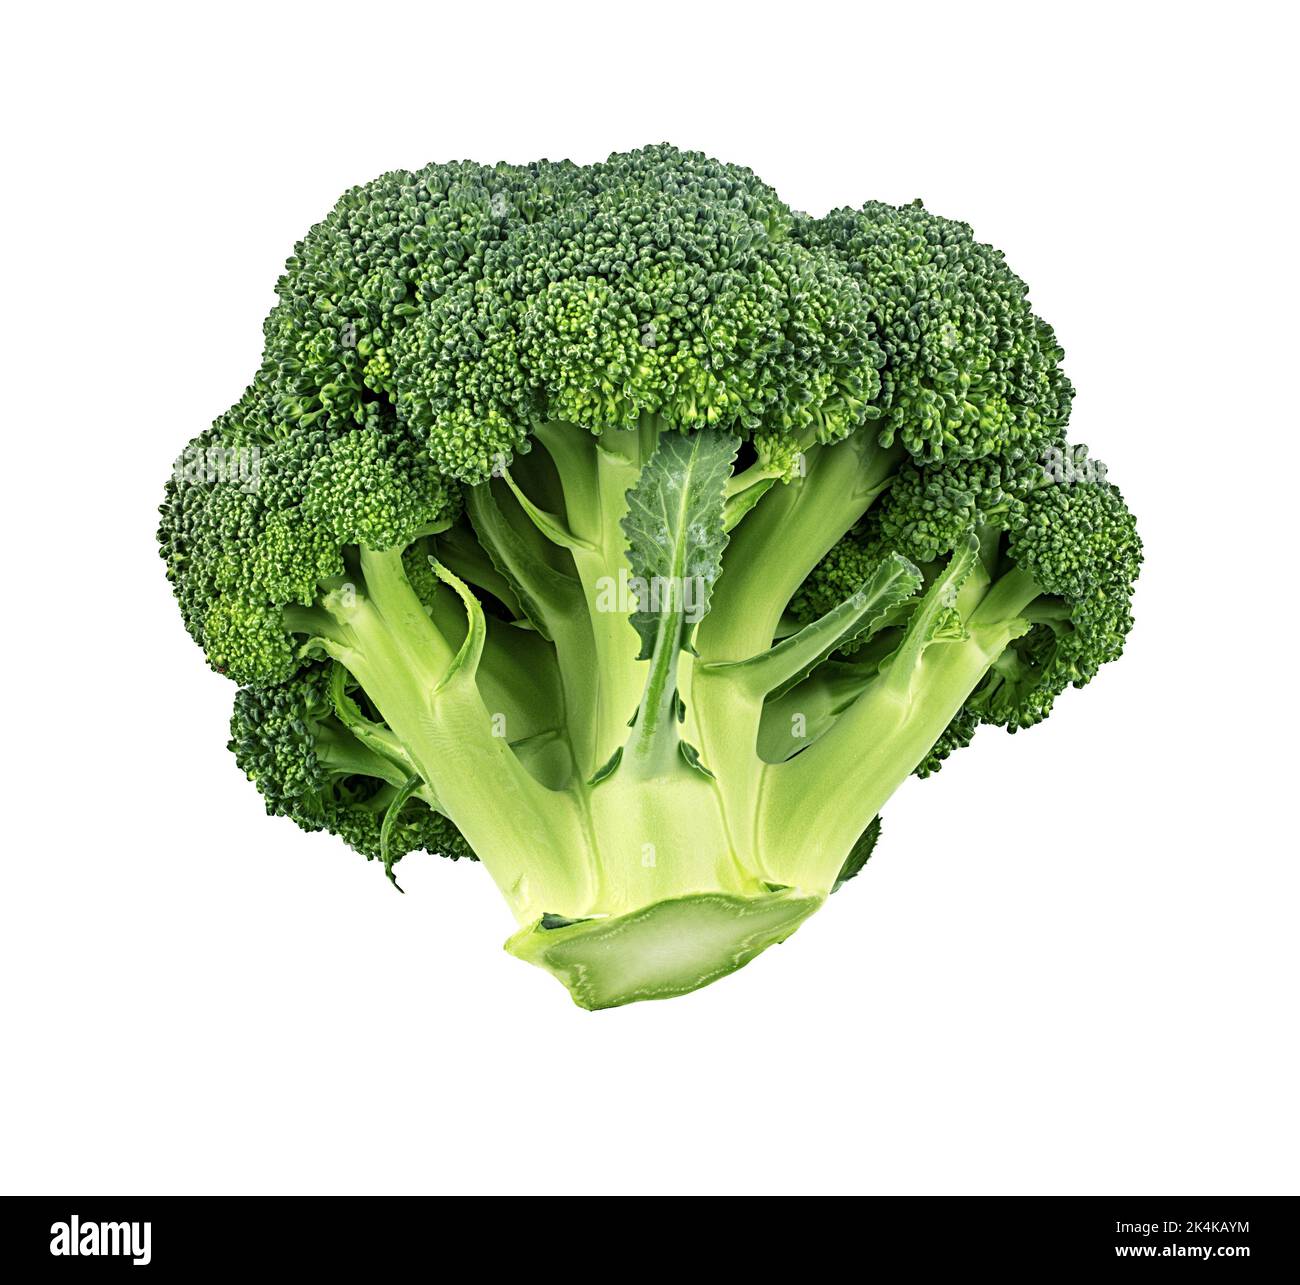 Broccoli isolated on white background. Stock Photo